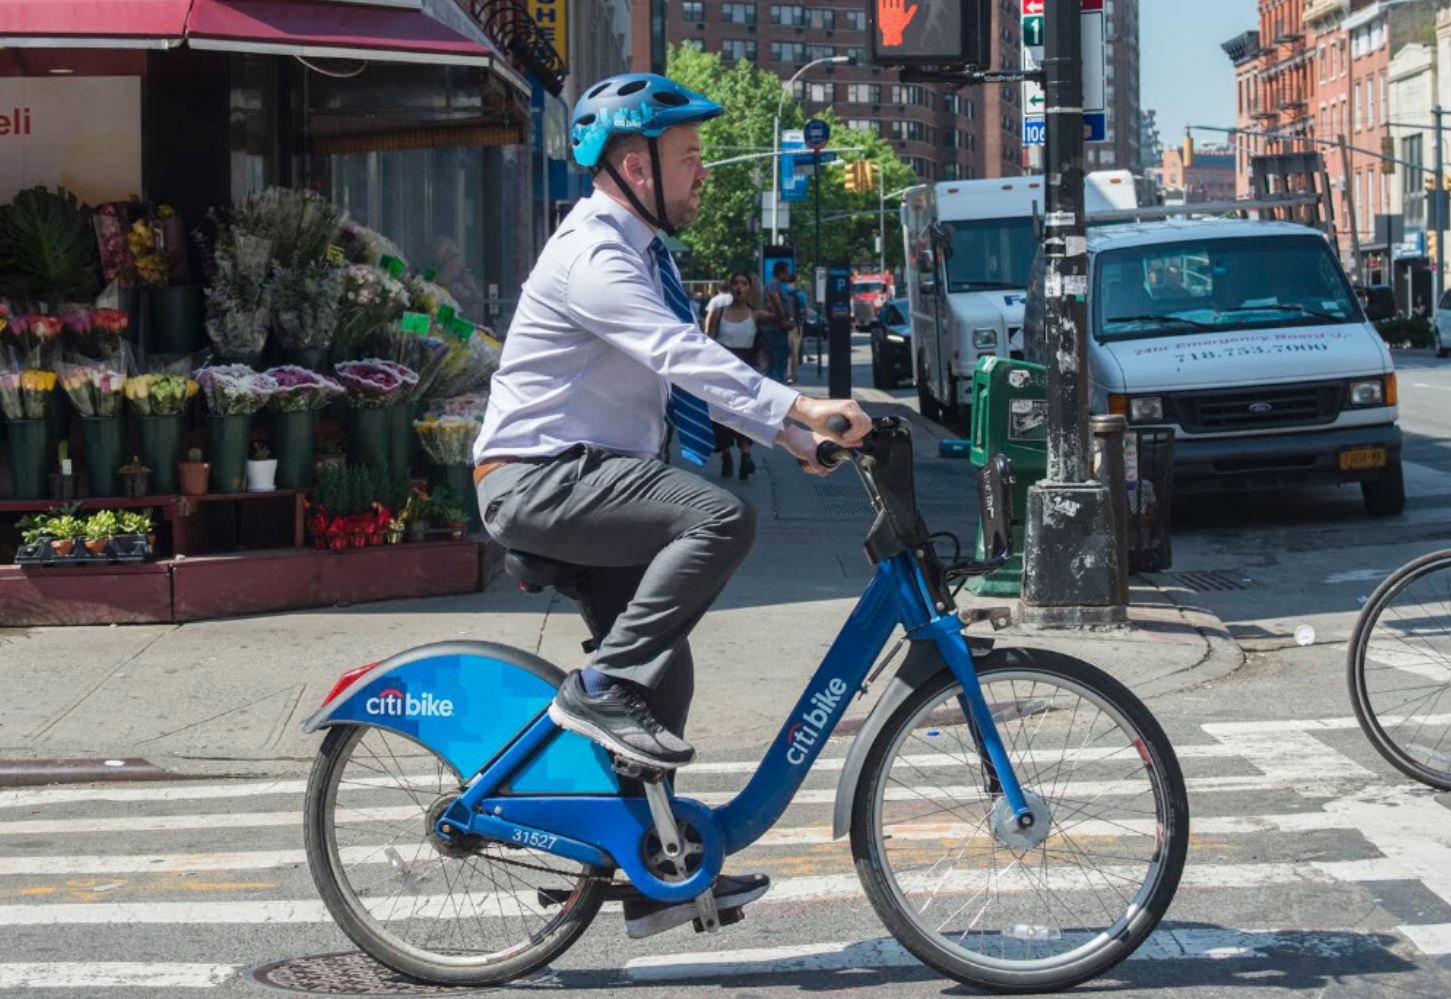 Former New York City Council speaker Corey Johnson riding a Citi Bike.